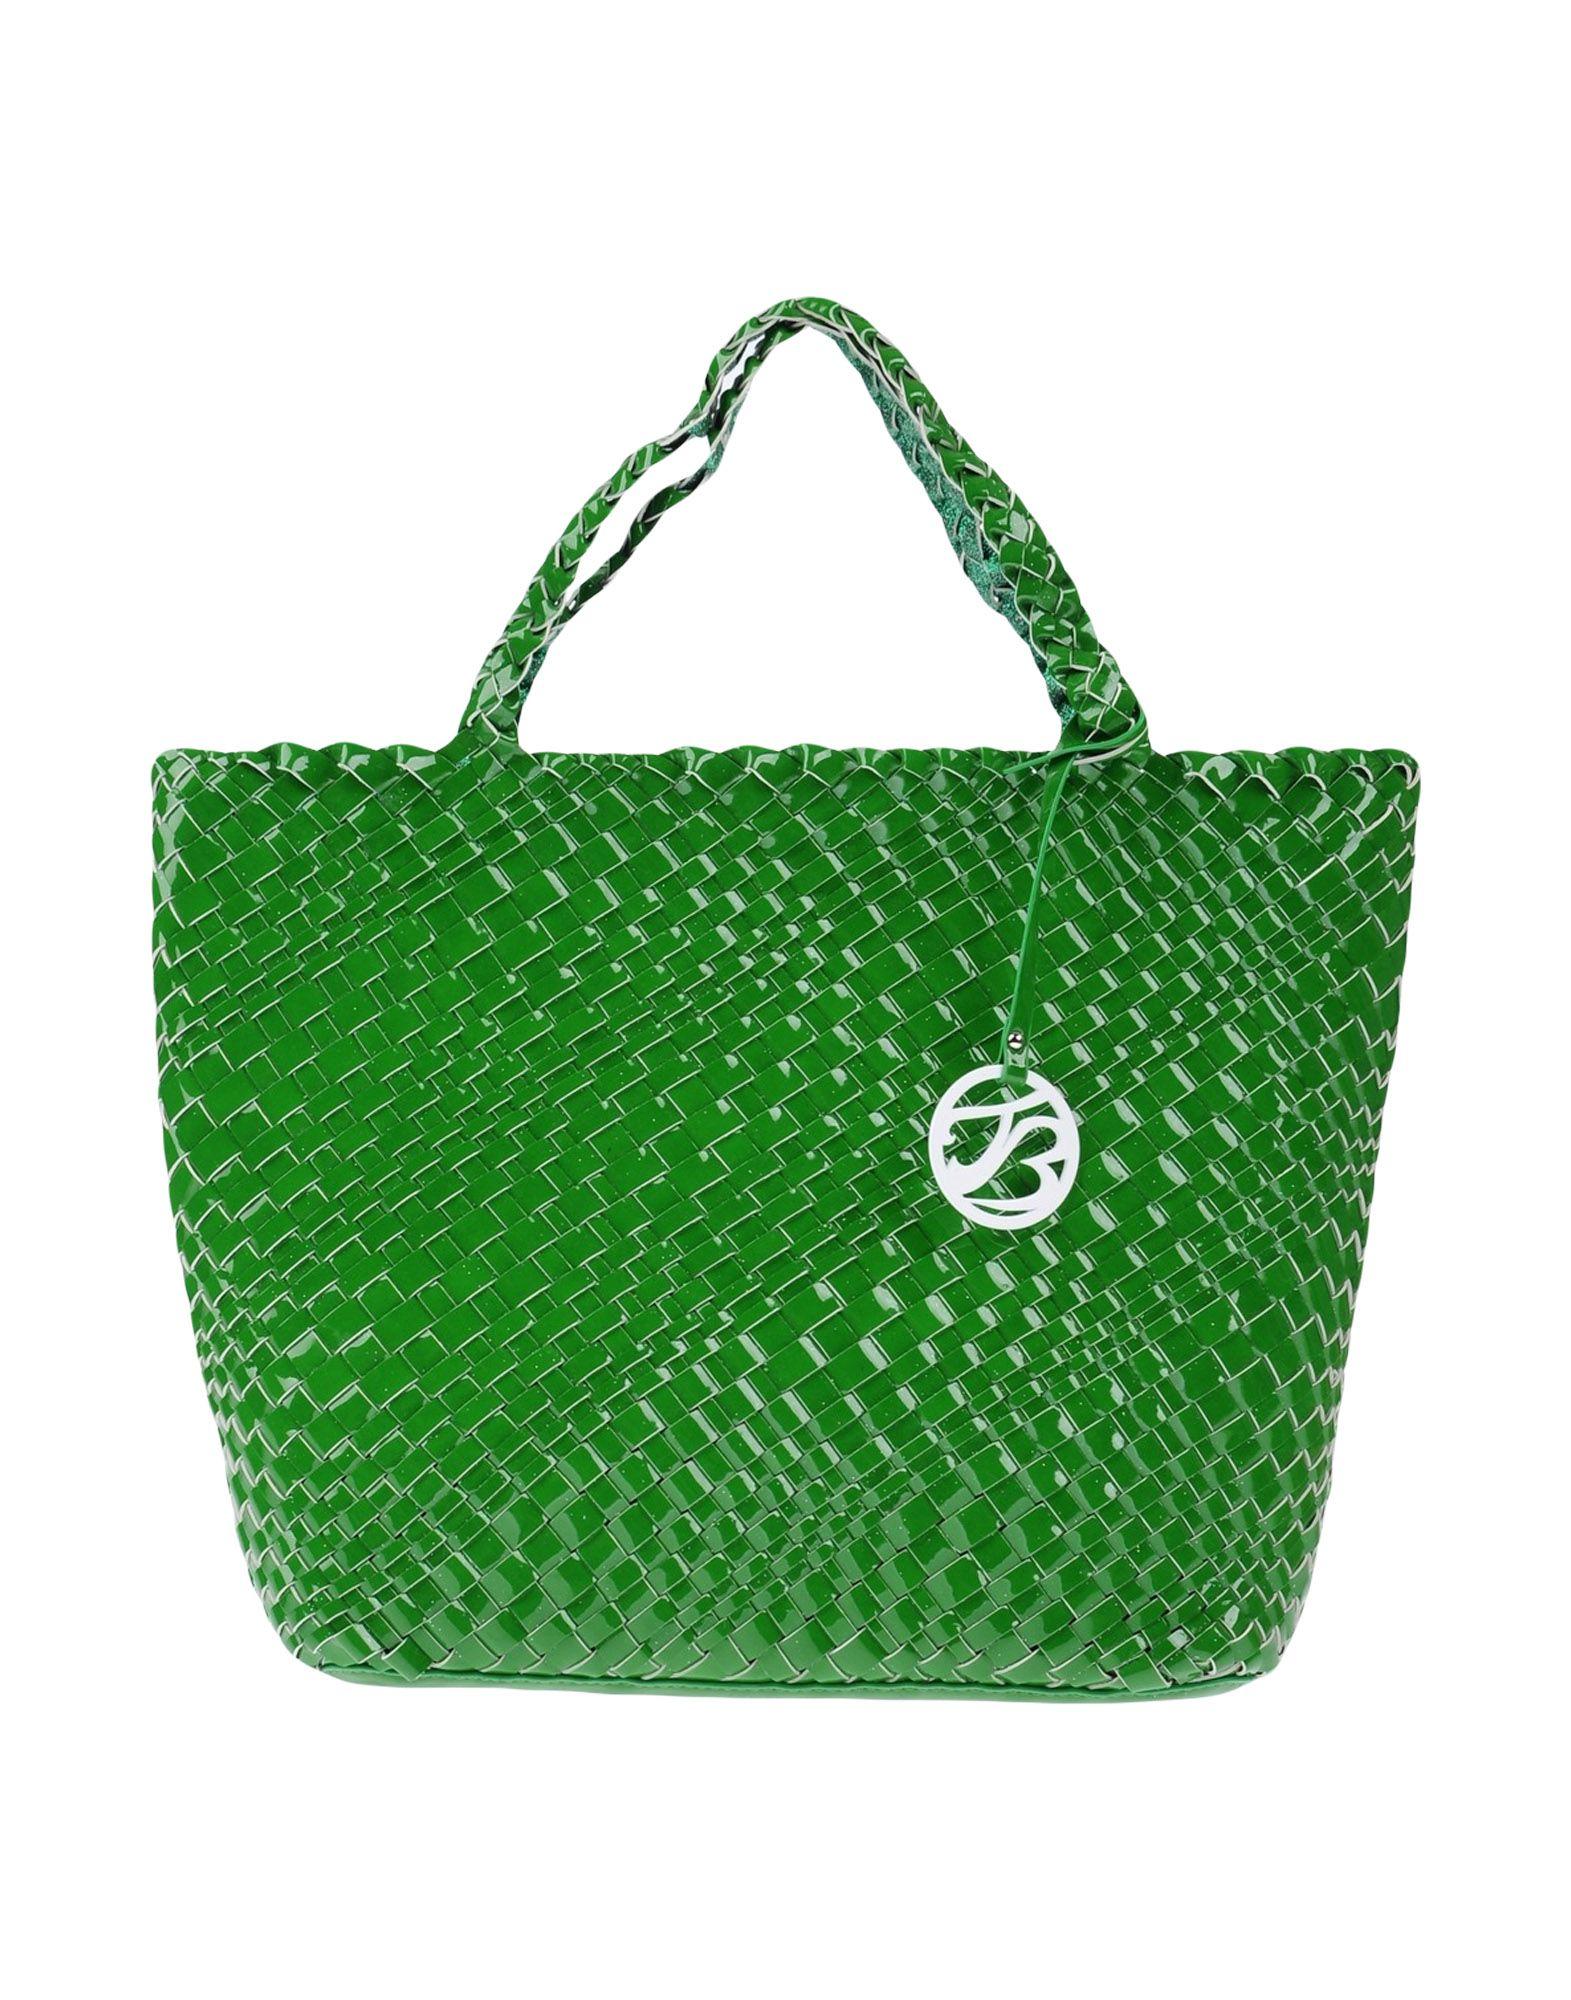 Lyst Tosca  Blu Handbag in Green 